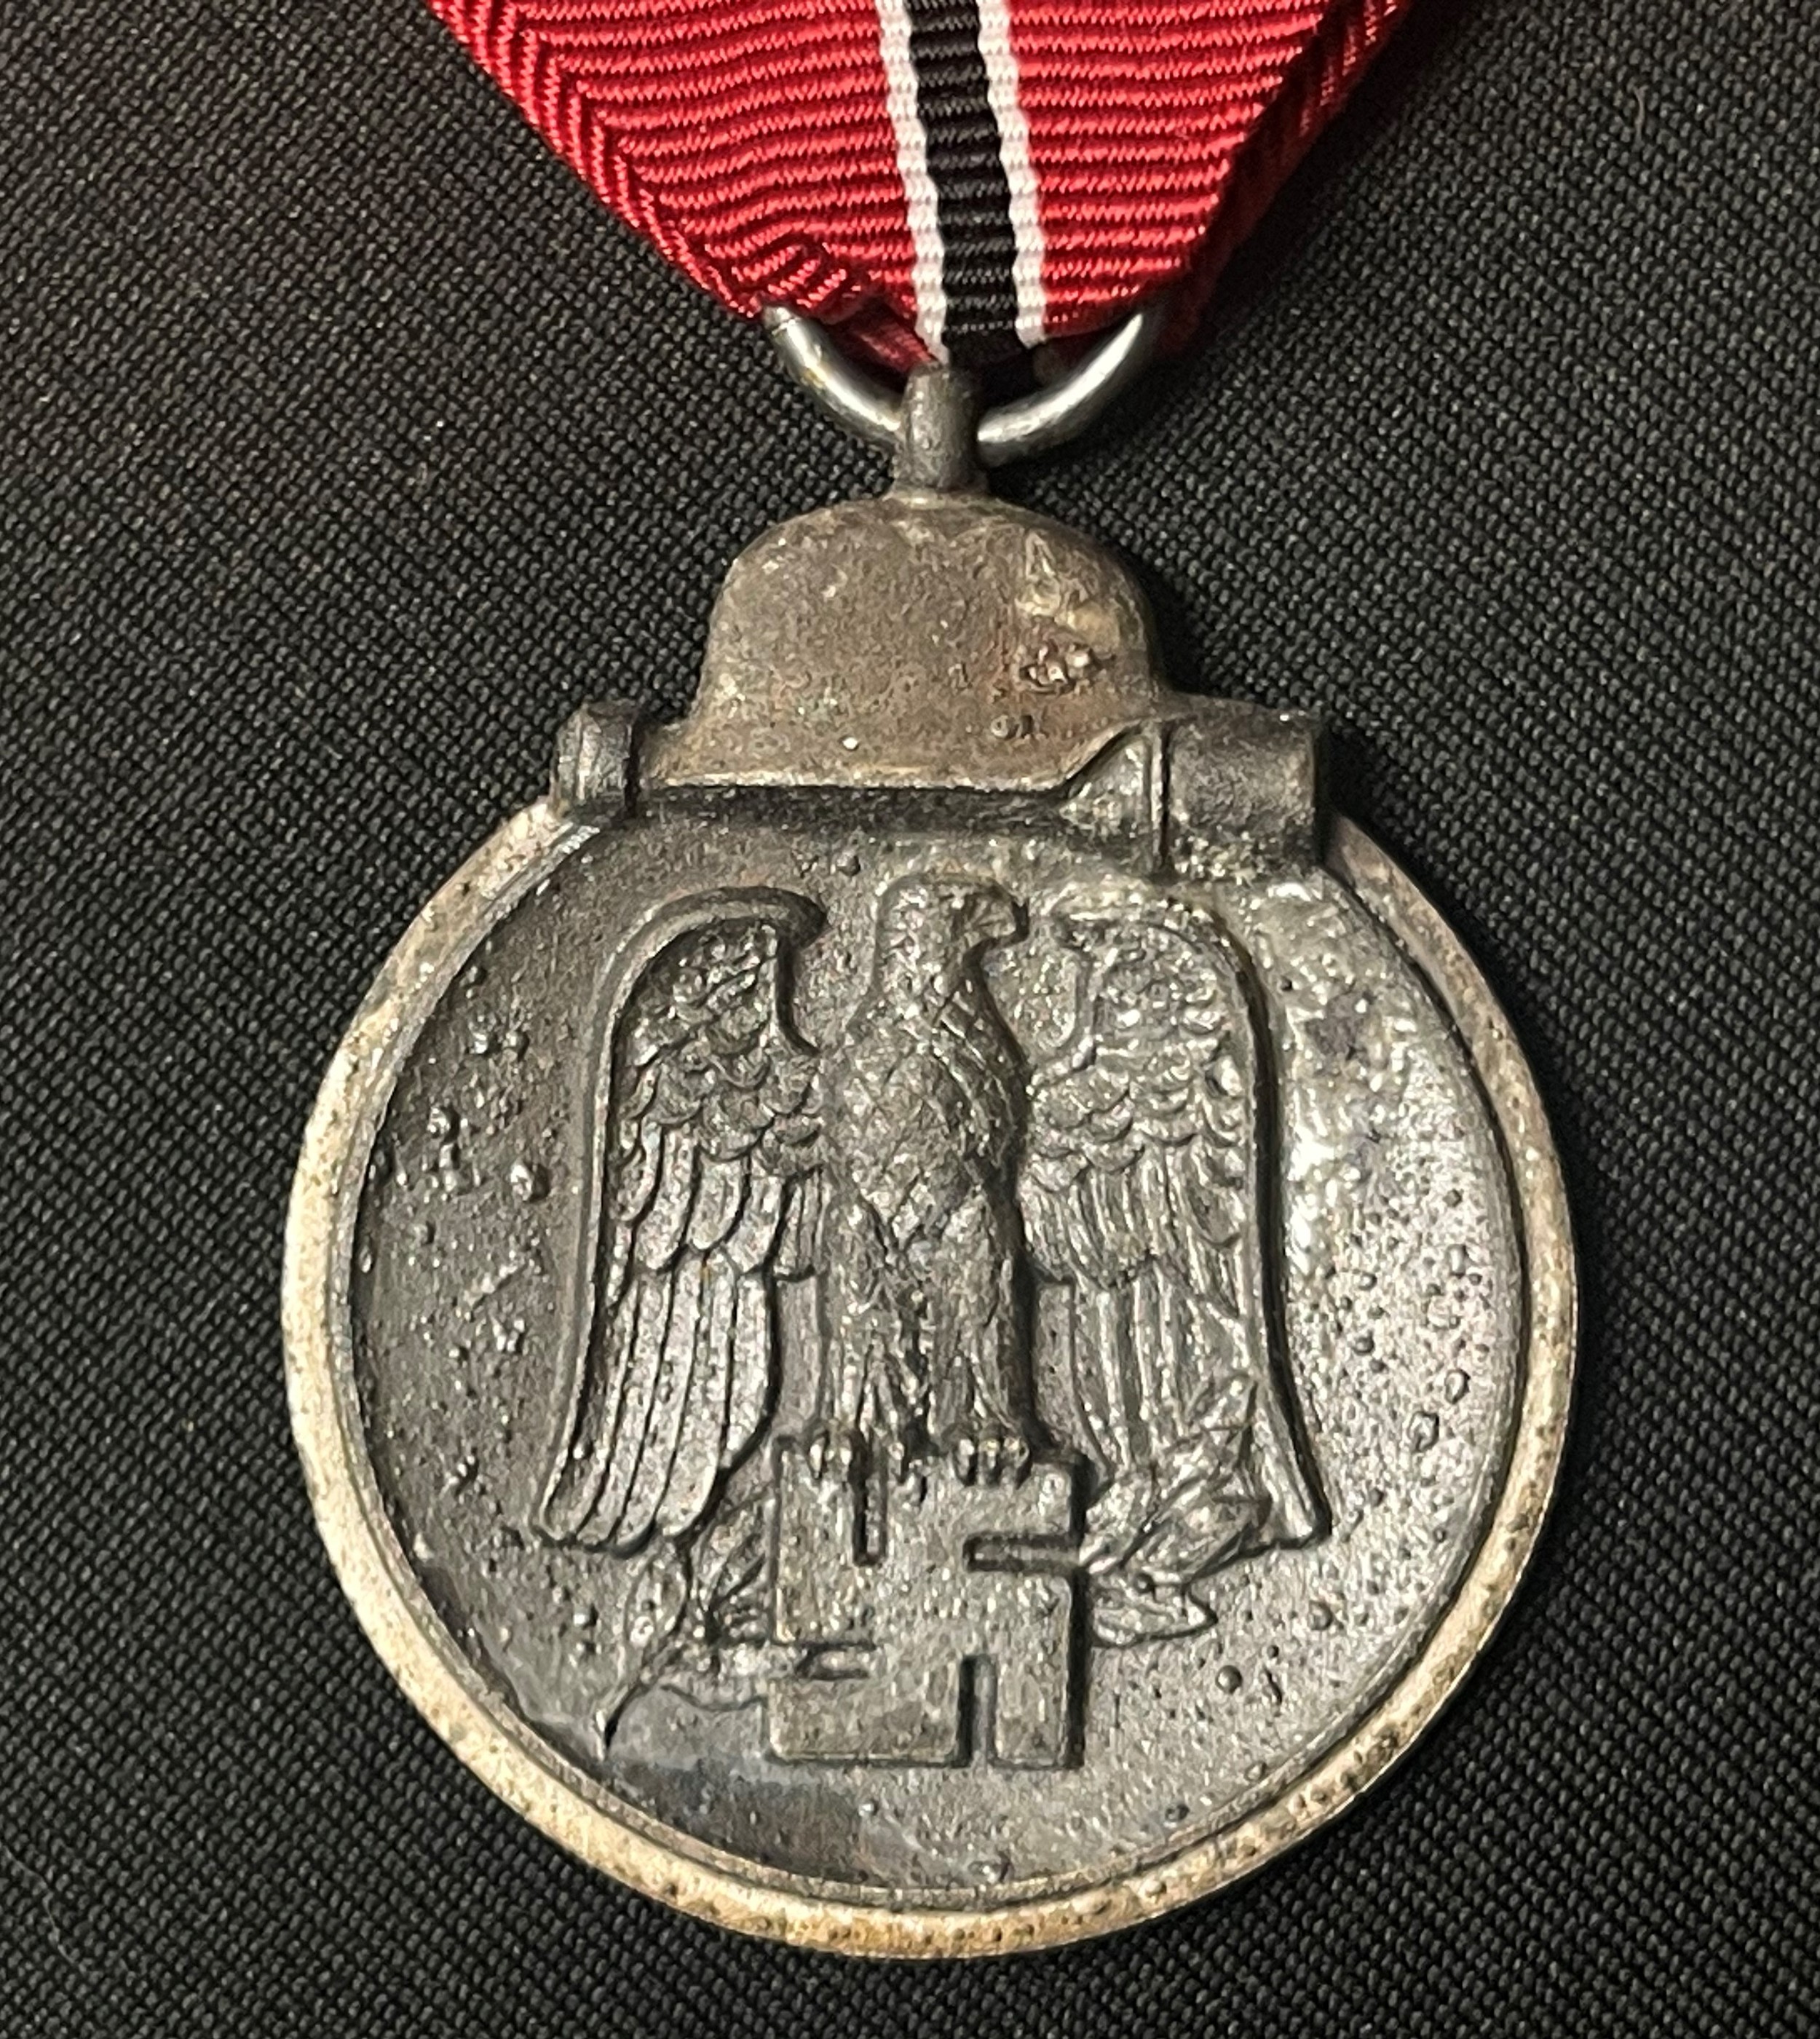 WW2 Third Reich Medaille "Winterschlacht im Osten 1941/42" (Ostmedaille) - Russian Front Medal.